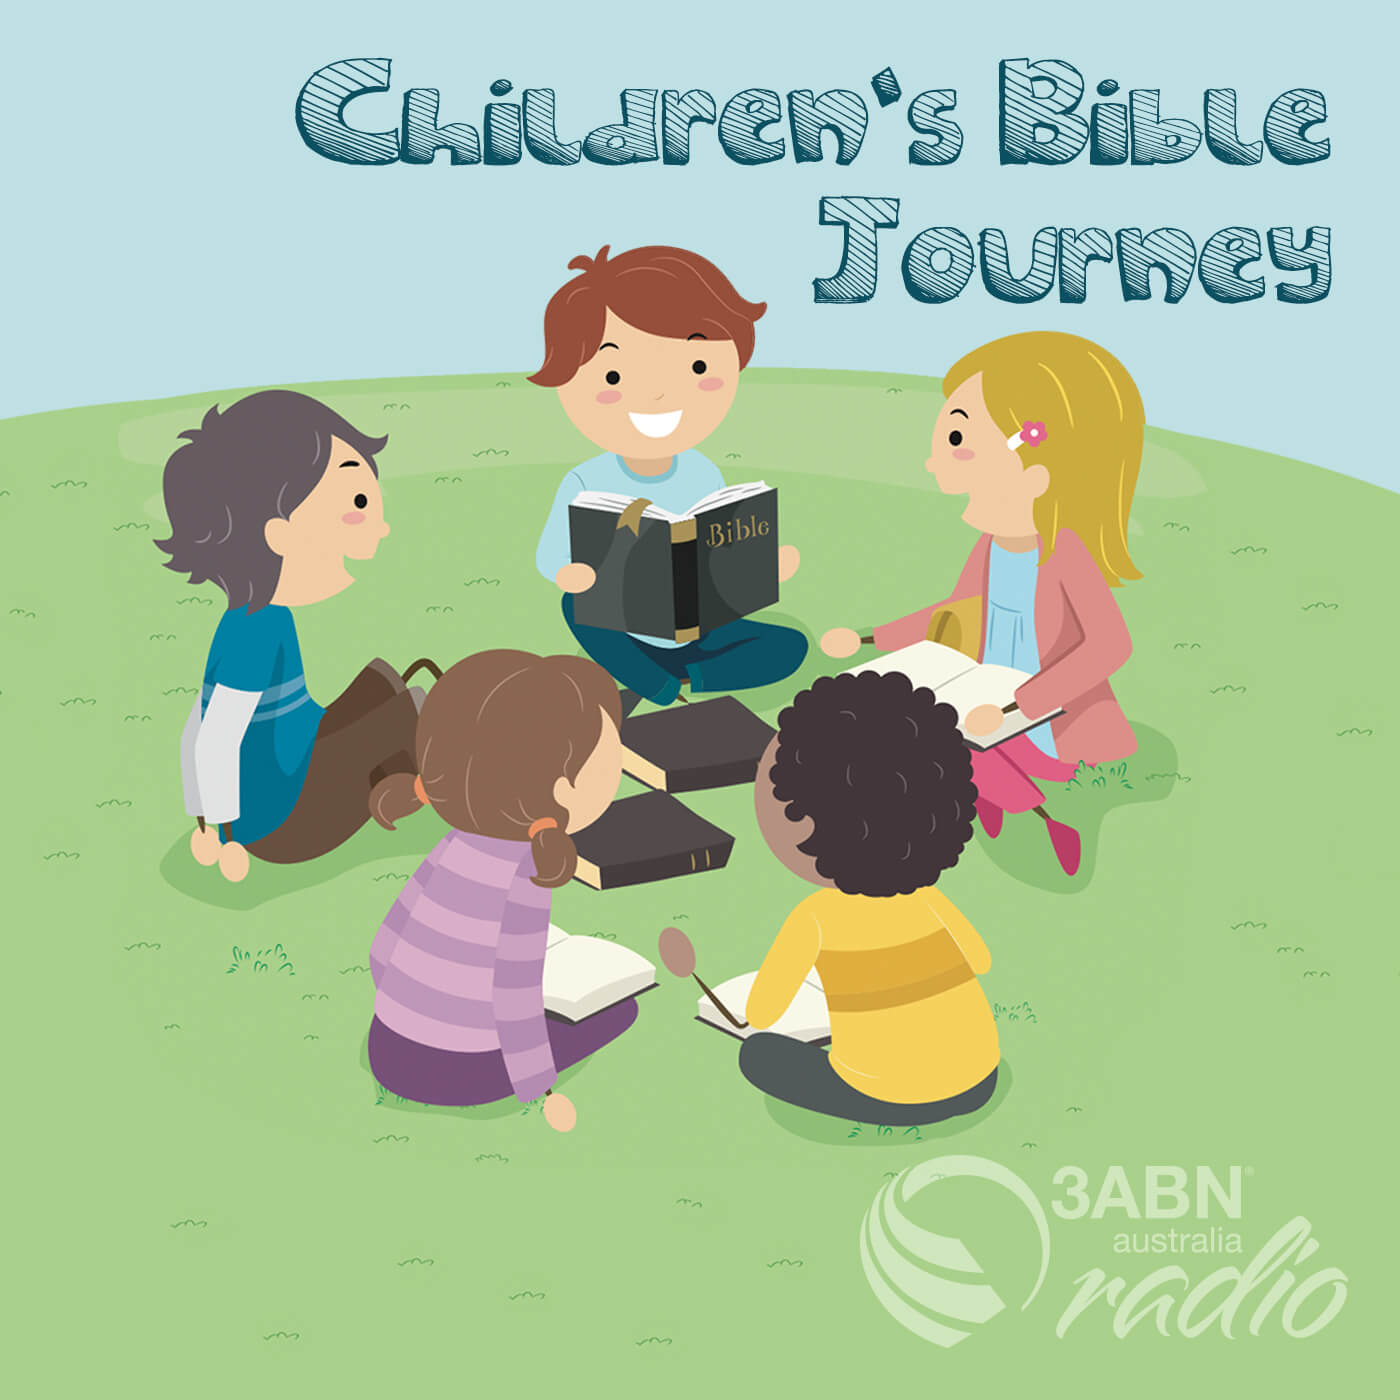 Children's Bible Journey - 2179